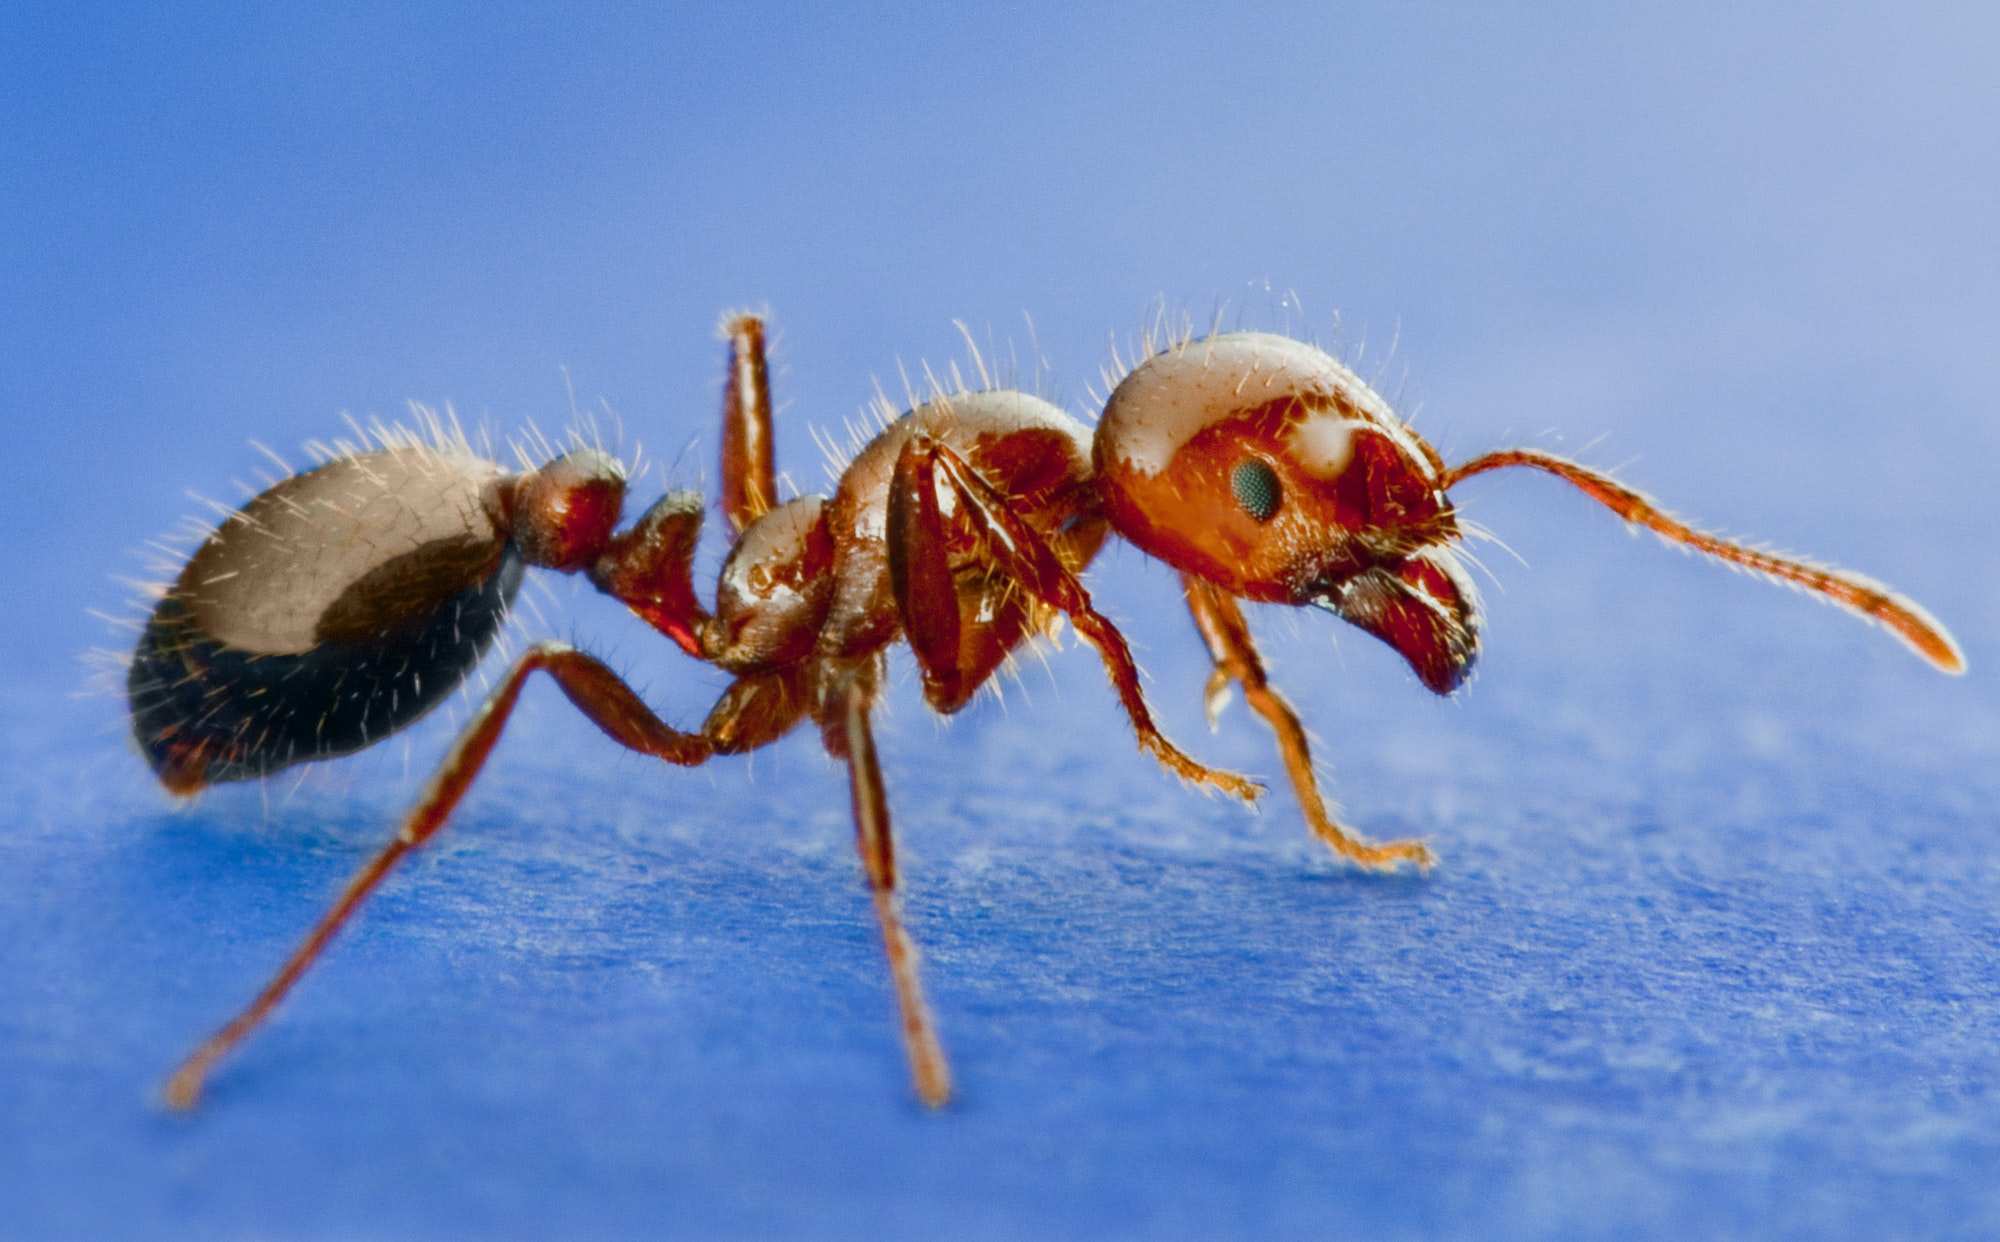 a friendly ant